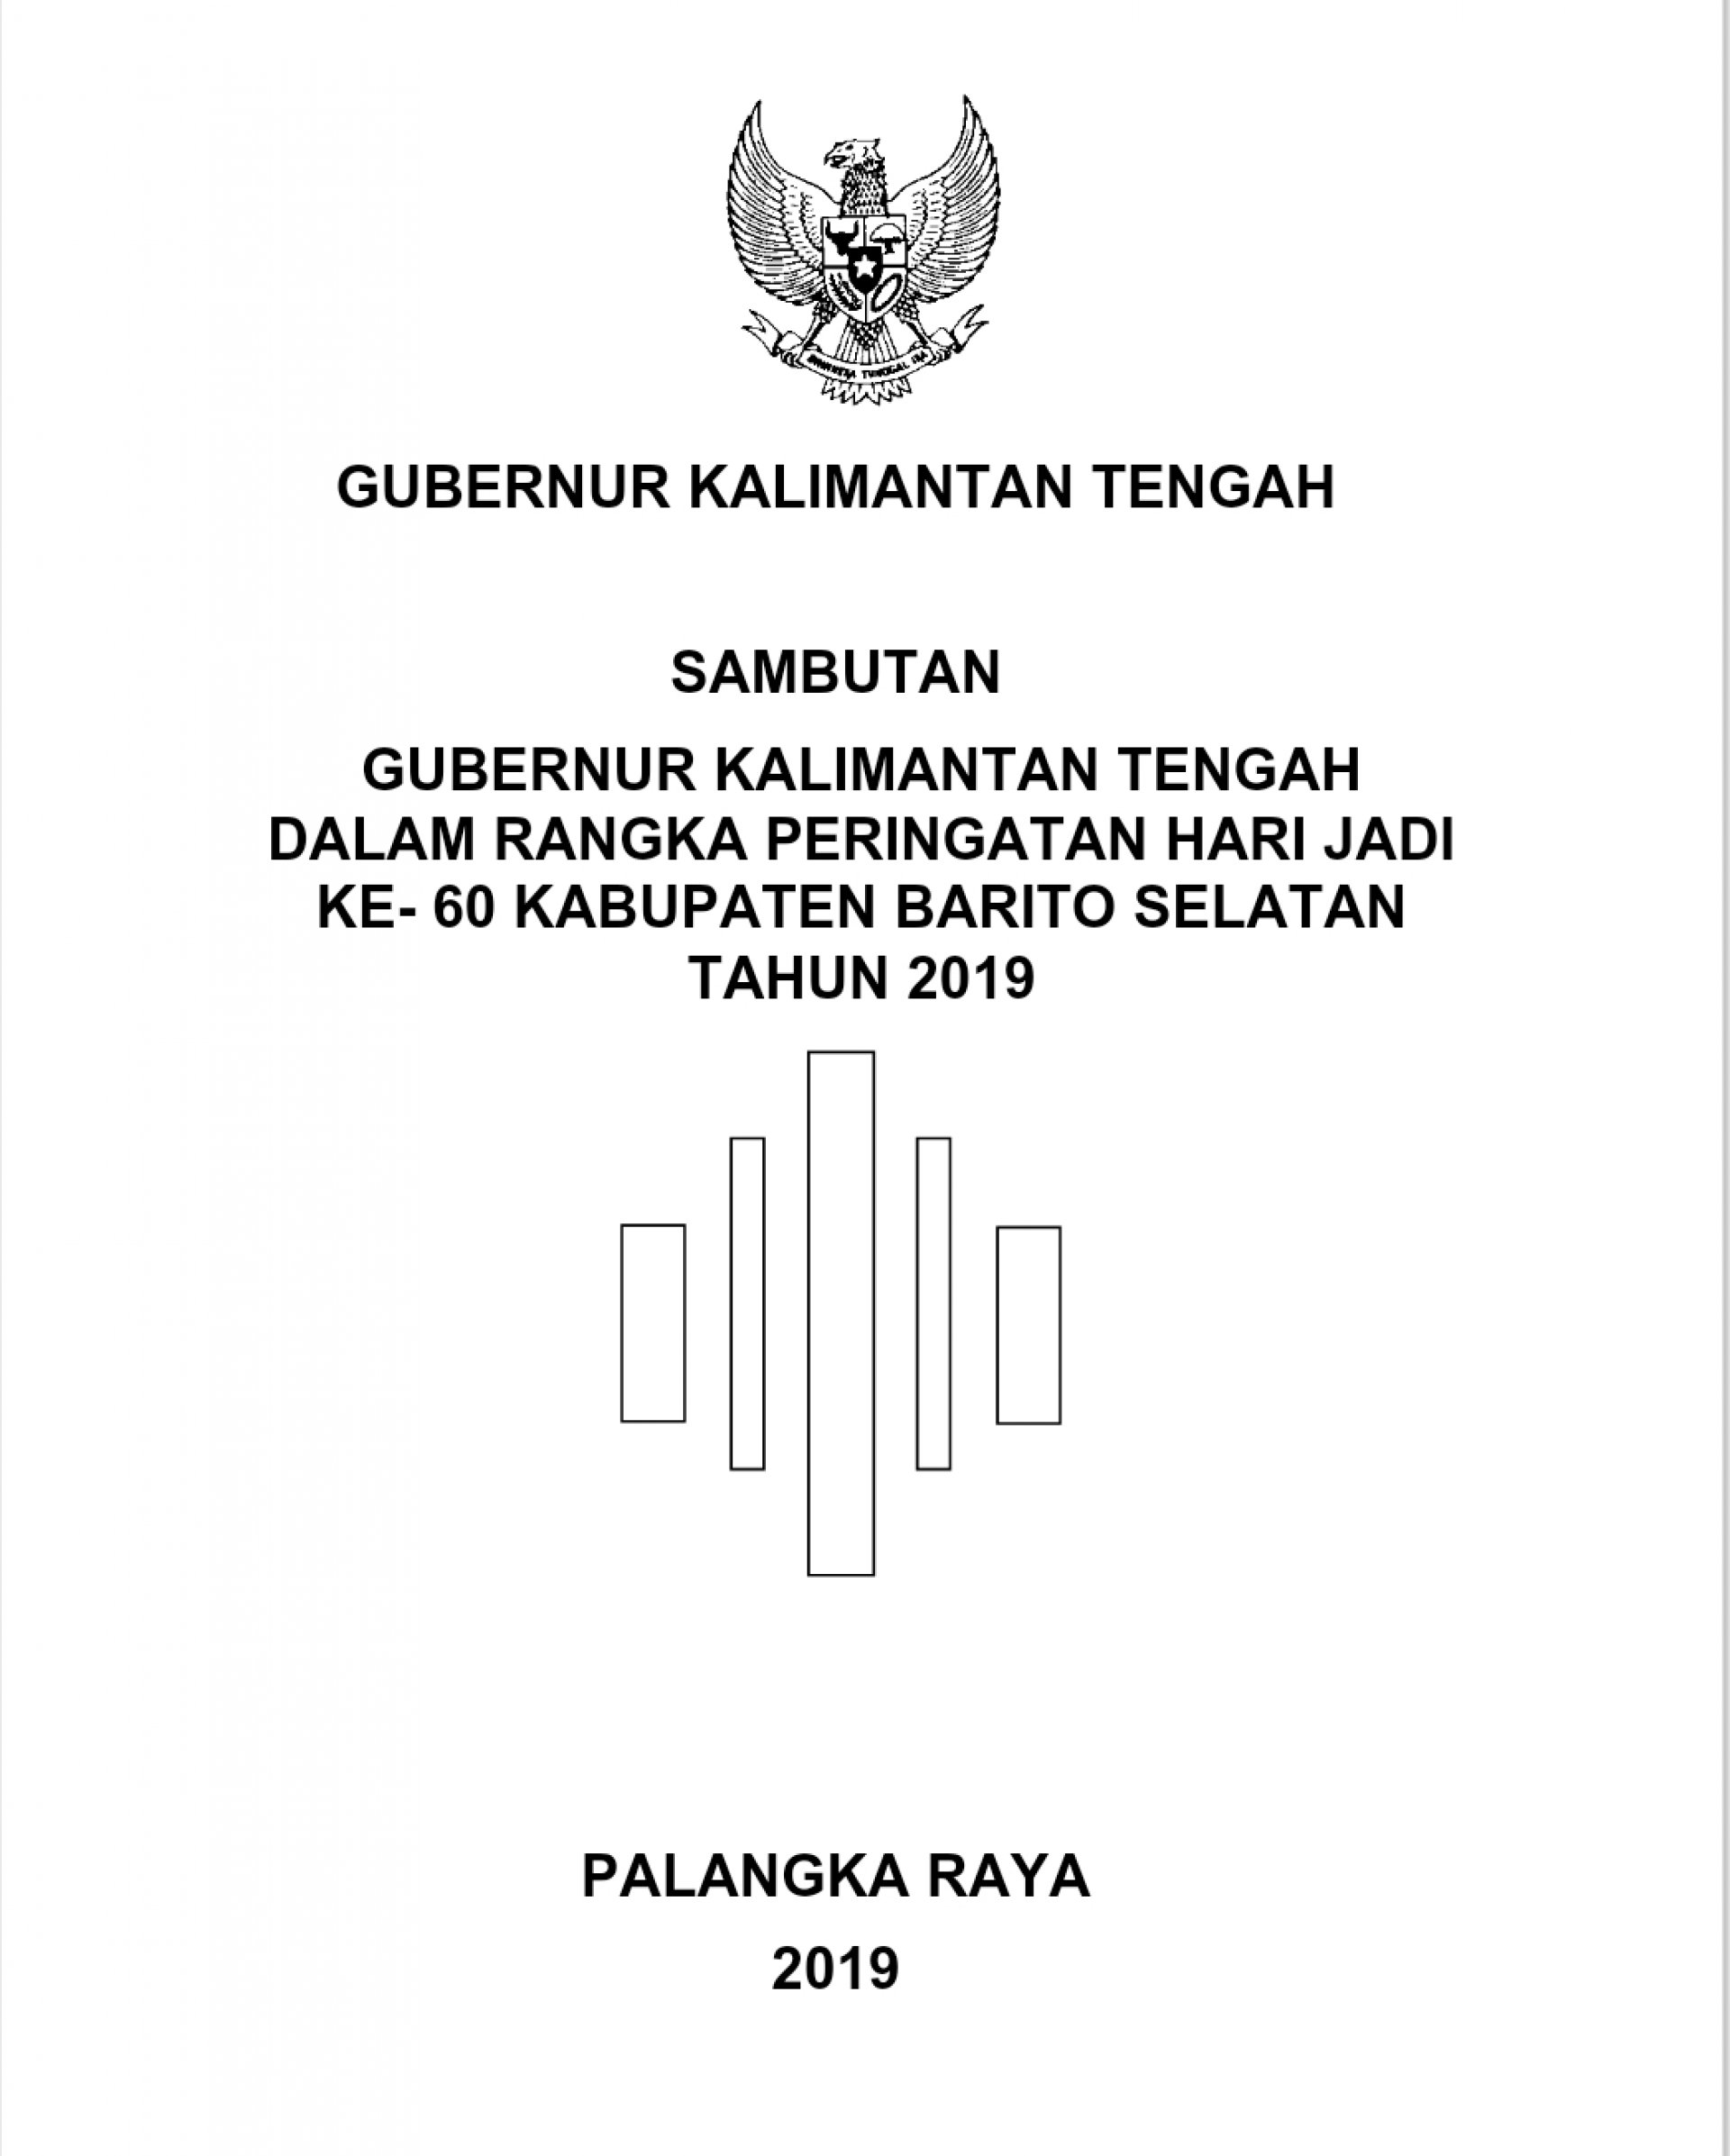 Sambutan Gubernur Kalimantan Tengah  Dalam Rangka Peringatan Hari Jadi  ke-60 Kabupaten Barito Selatan Tahun 2019